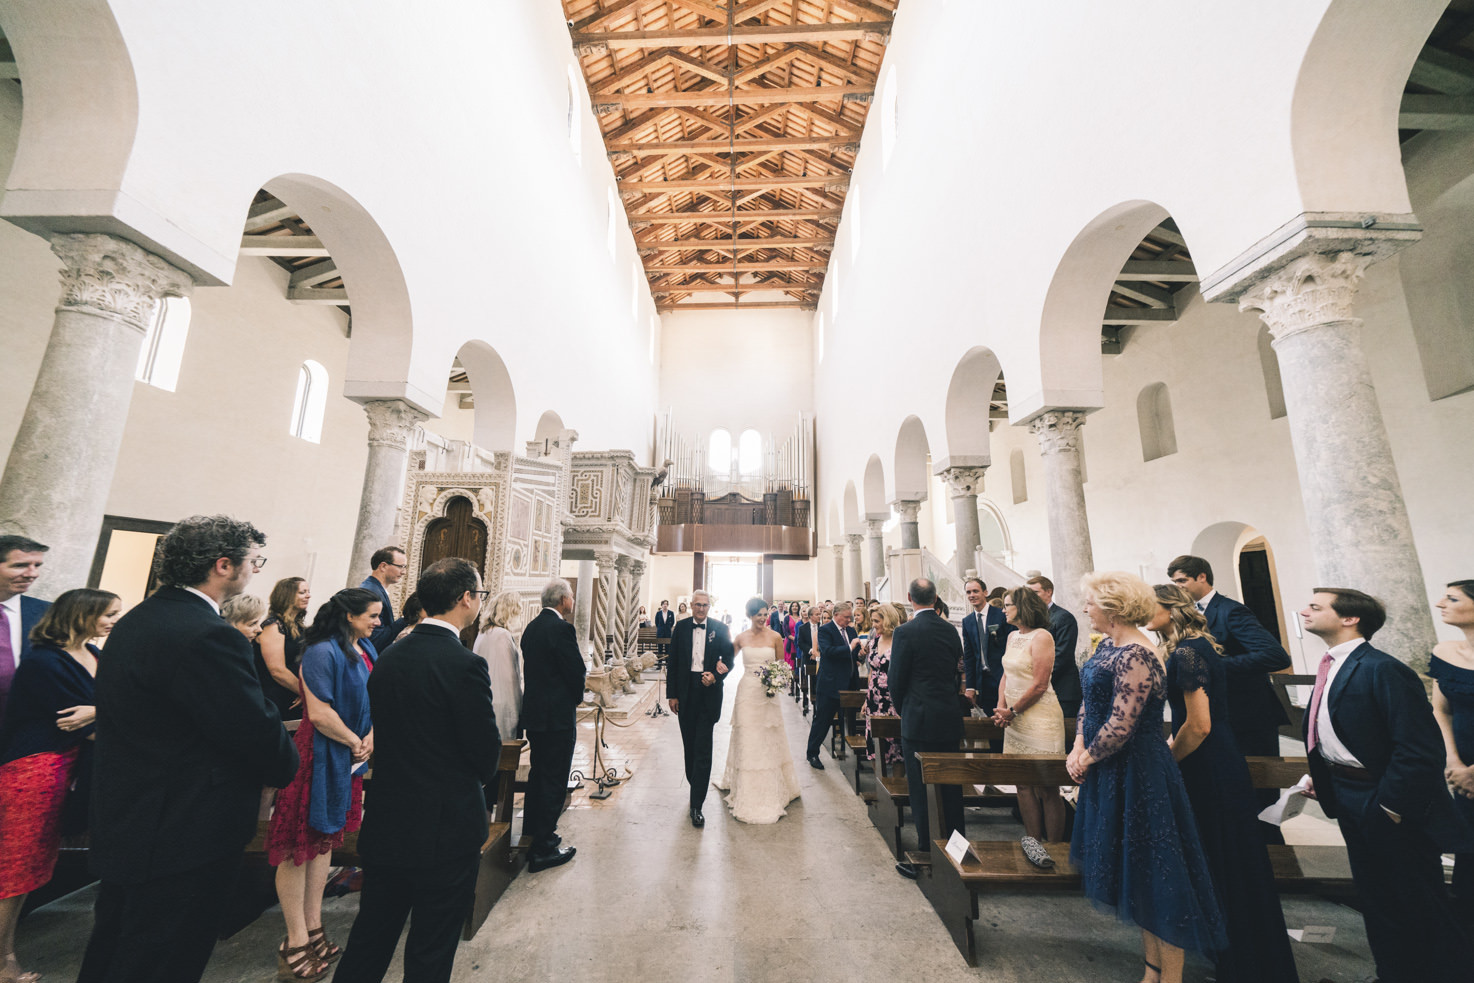 Arrival of the bride at Ravello Duomo